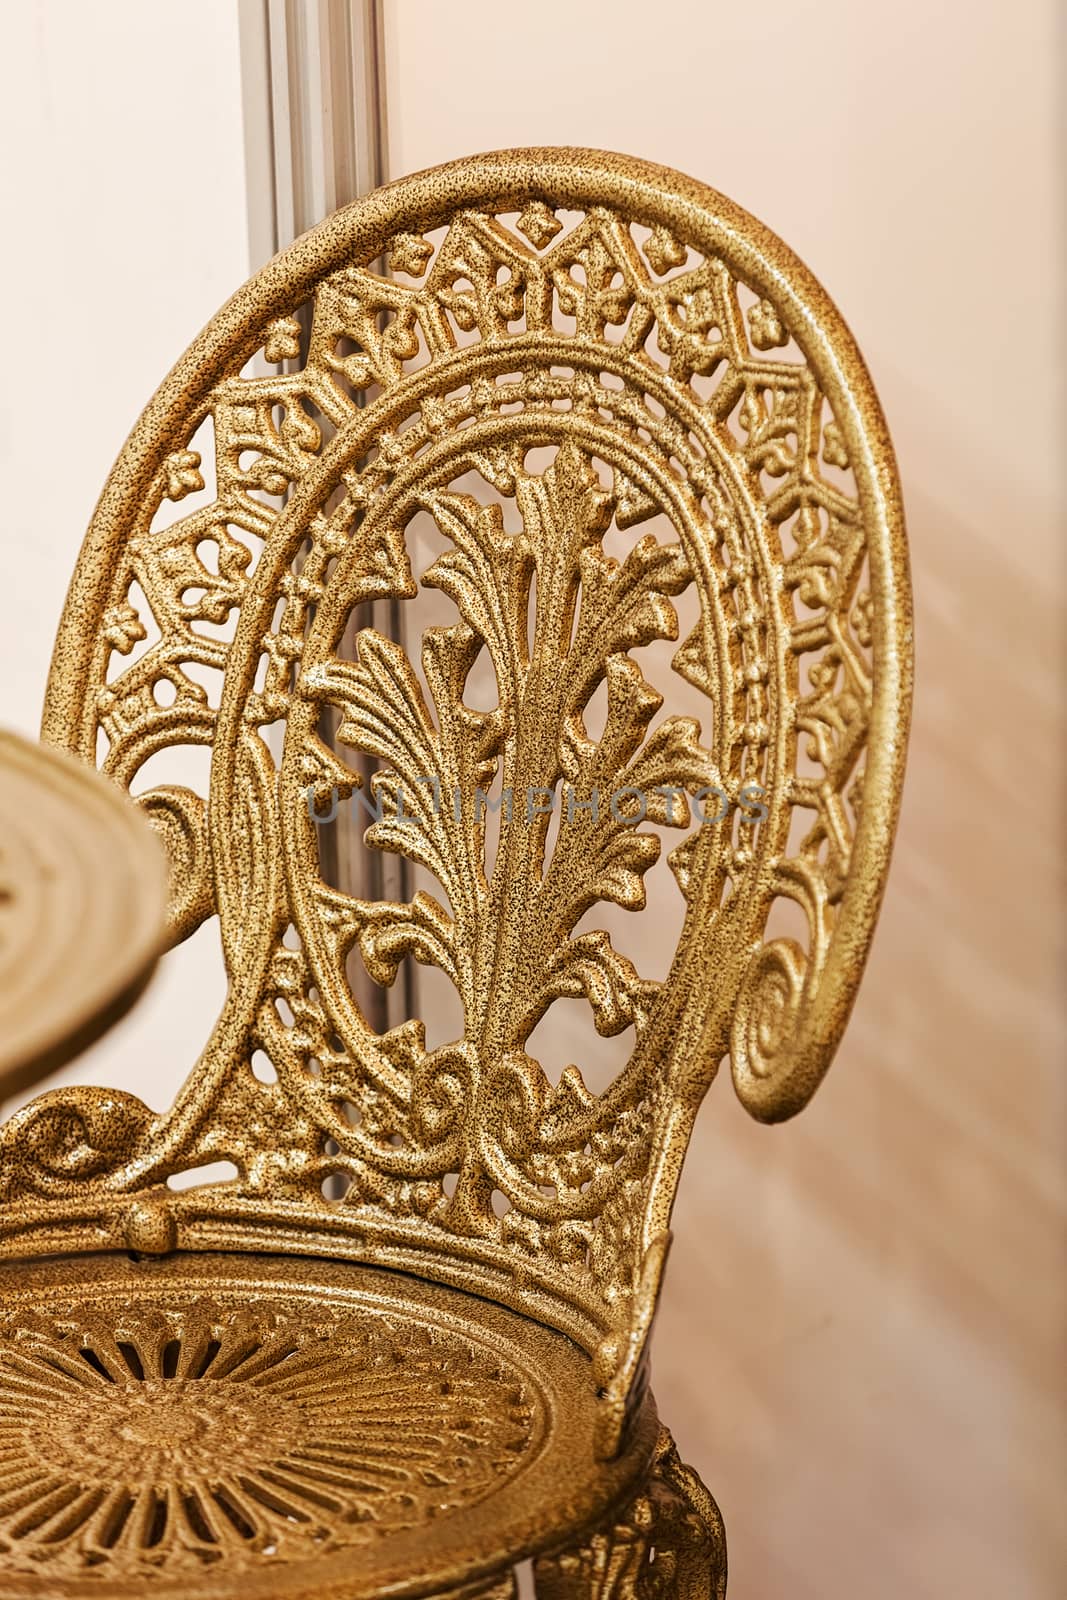 decorative golden chair by vladimirnenezic